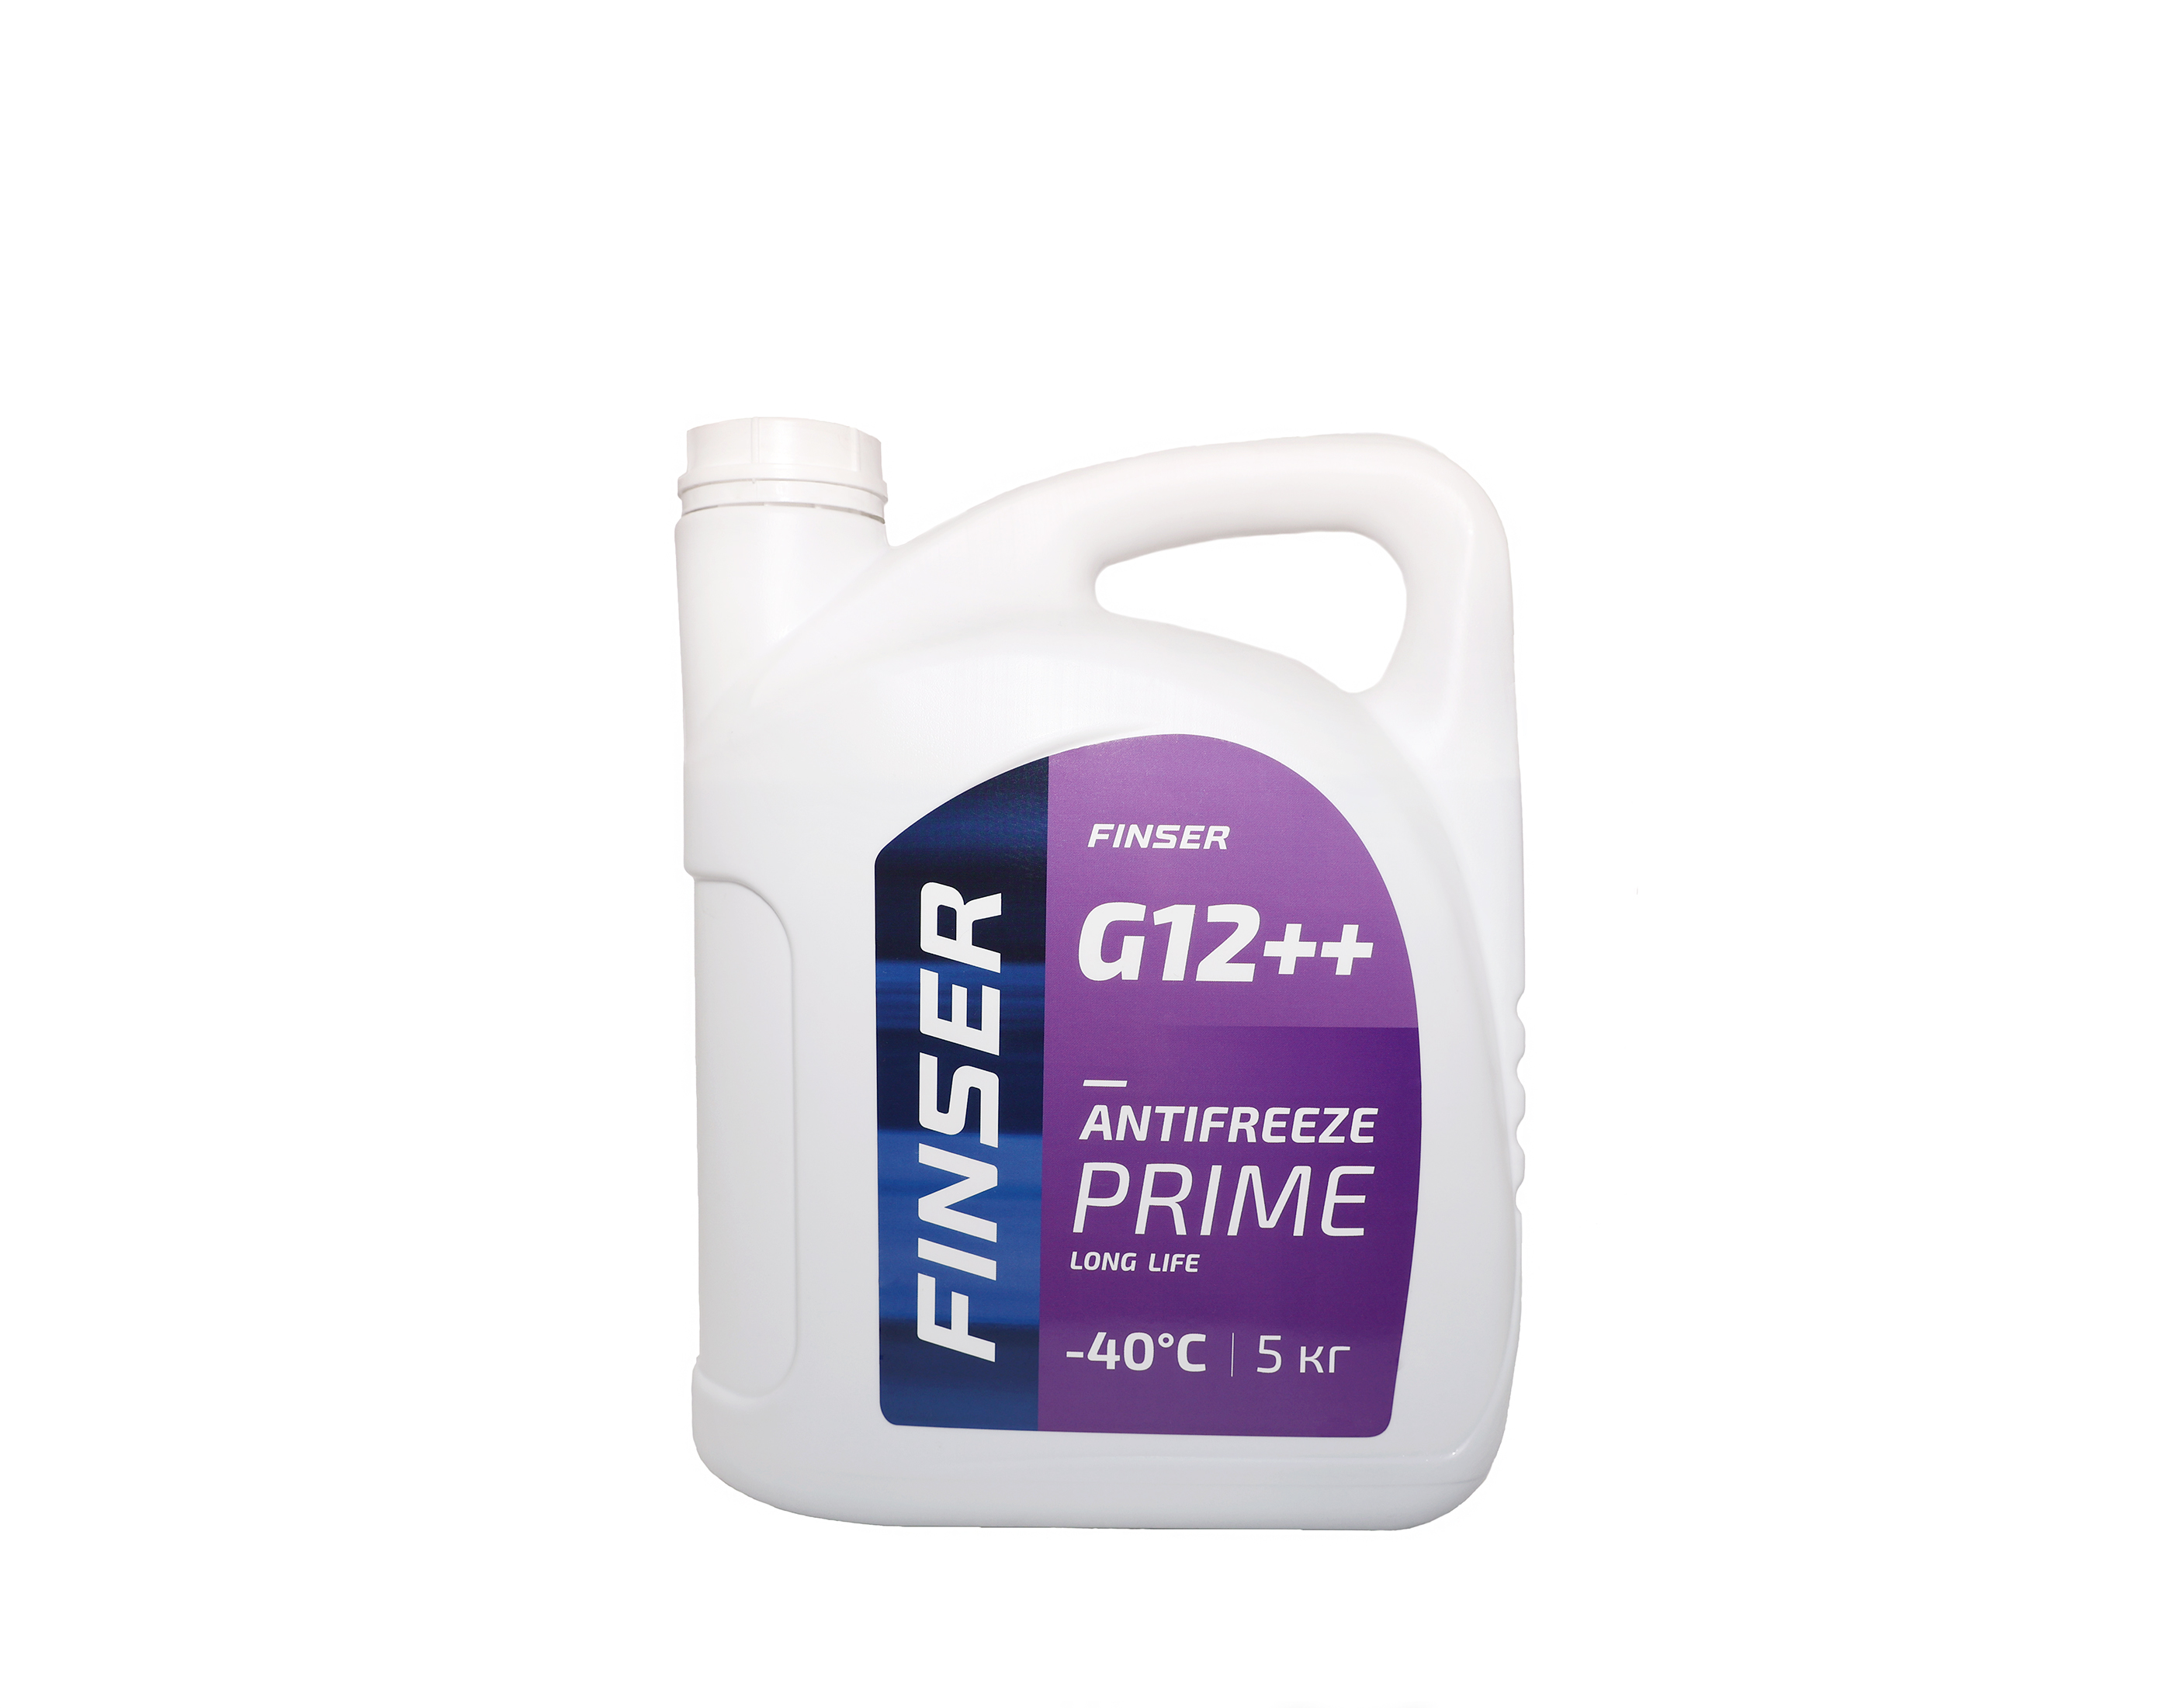 FINSER ANTIFREEZE PRIME  G12++ 5кг  (фиолетовый)